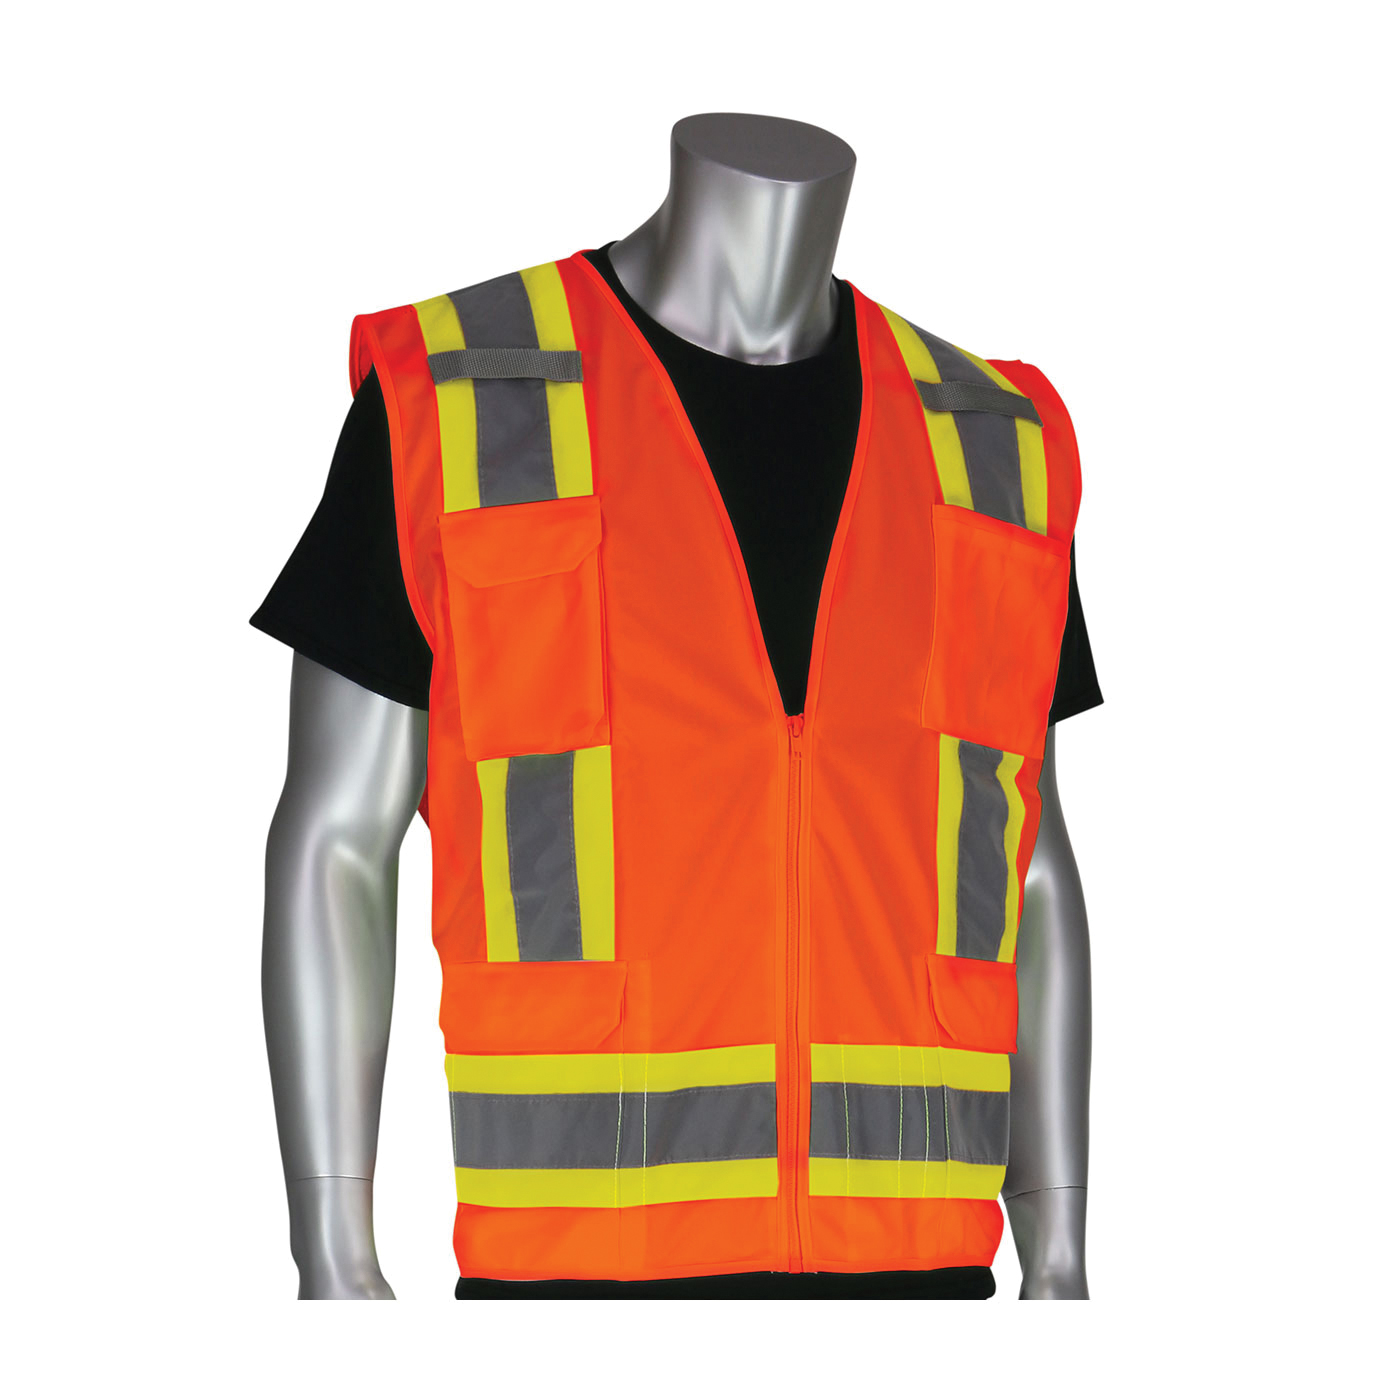 PIP® 302-0500S-ORG/3X 2-Tone Surveyor Safety Vest, 3XL, Hi-Viz Orange, Polyester/Solid Tricot, Zipper Closure, 11 Pockets, ANSI Class: Class 2, Specifications Met: ANSI 107 Type R